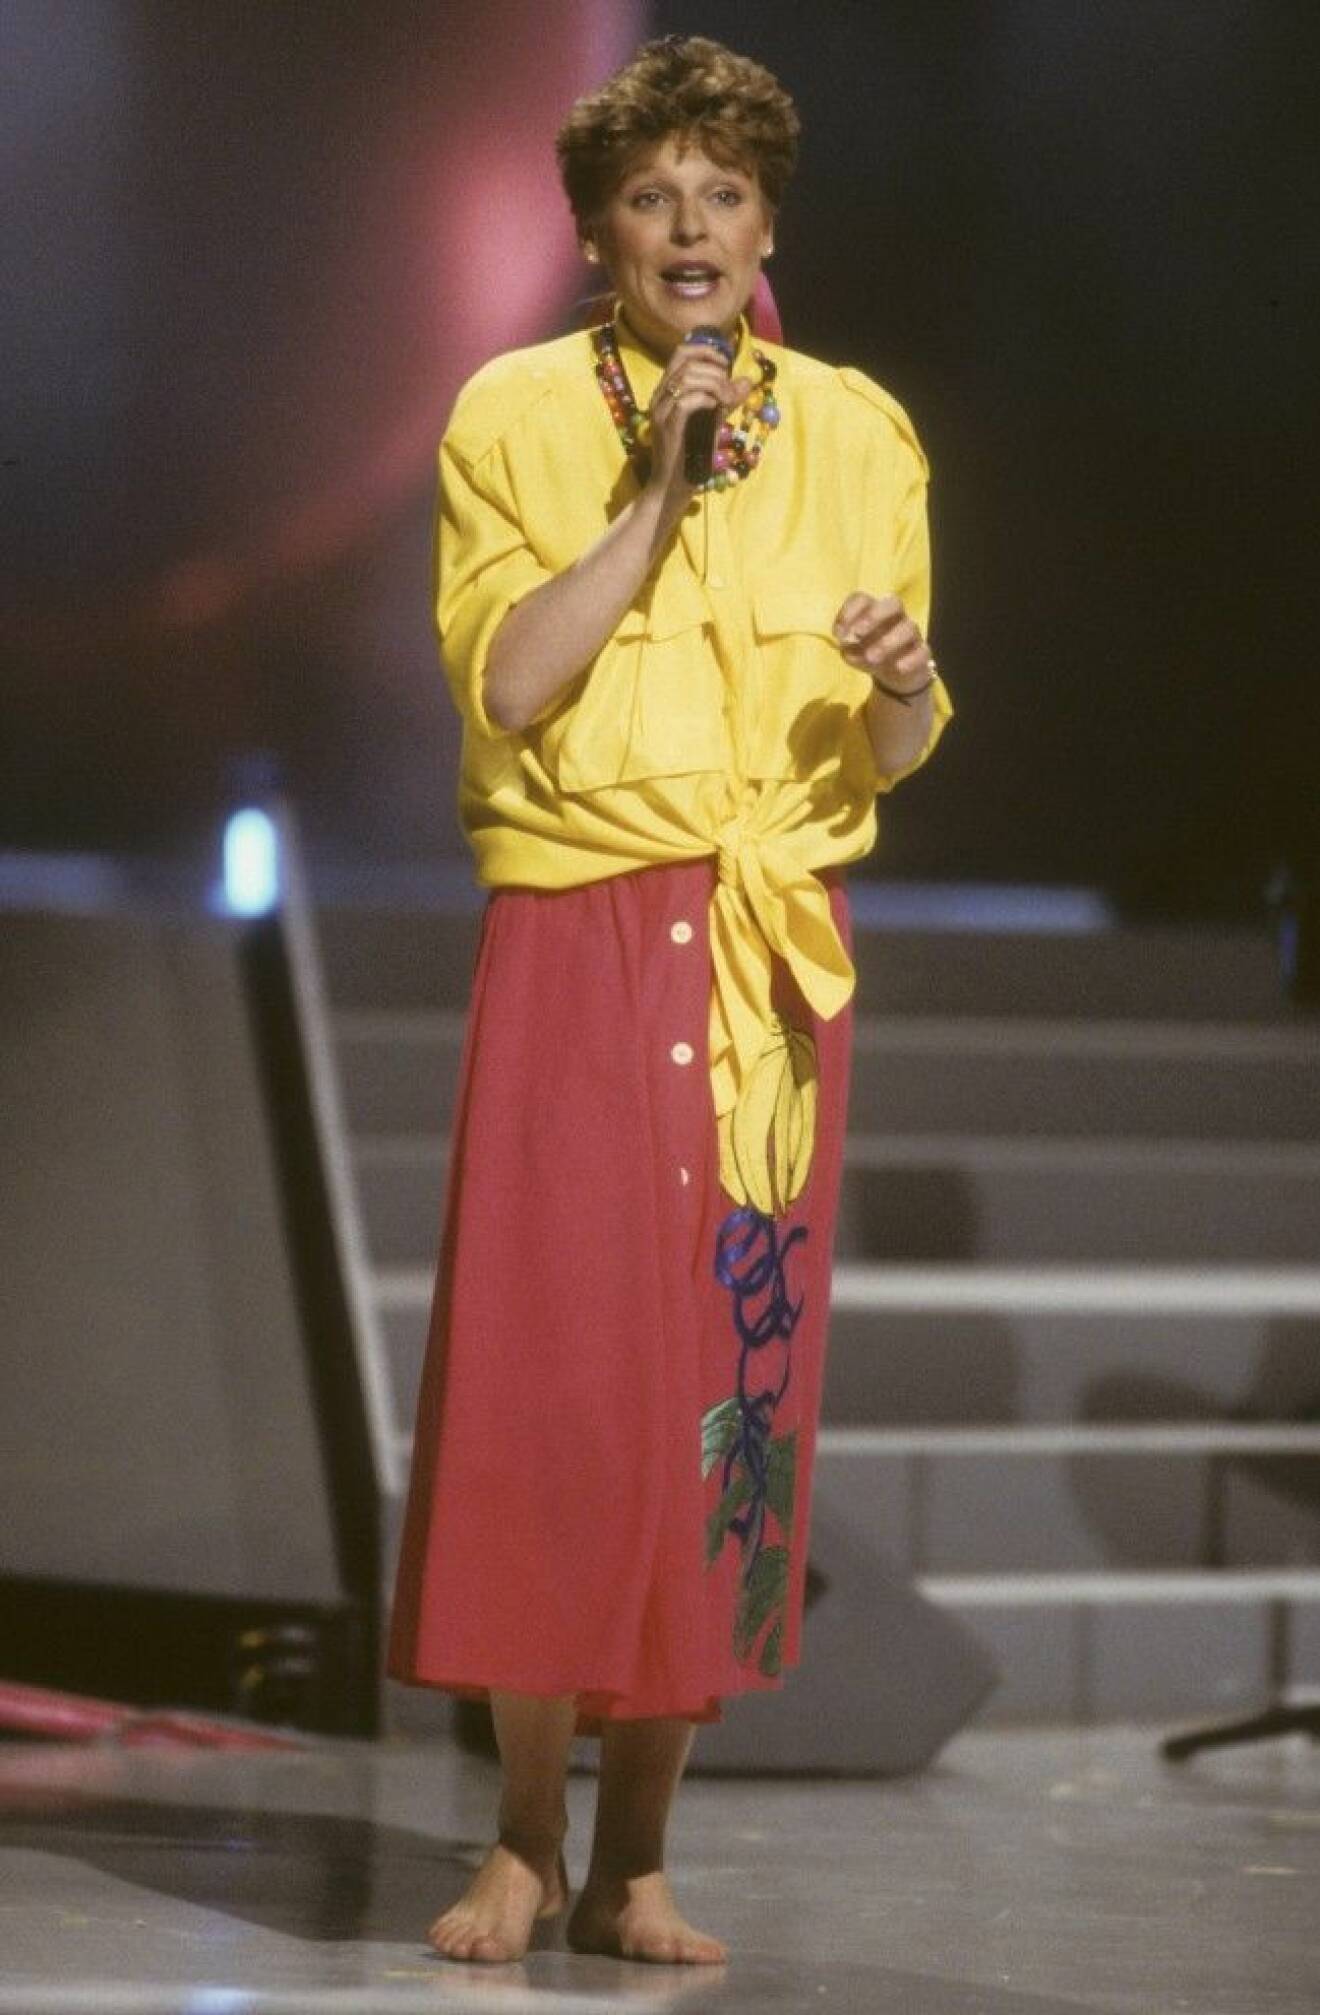 LOTTA ENGBERG artist i Melodifestivalen 1987 i Bryssel Belgien Dia 21291